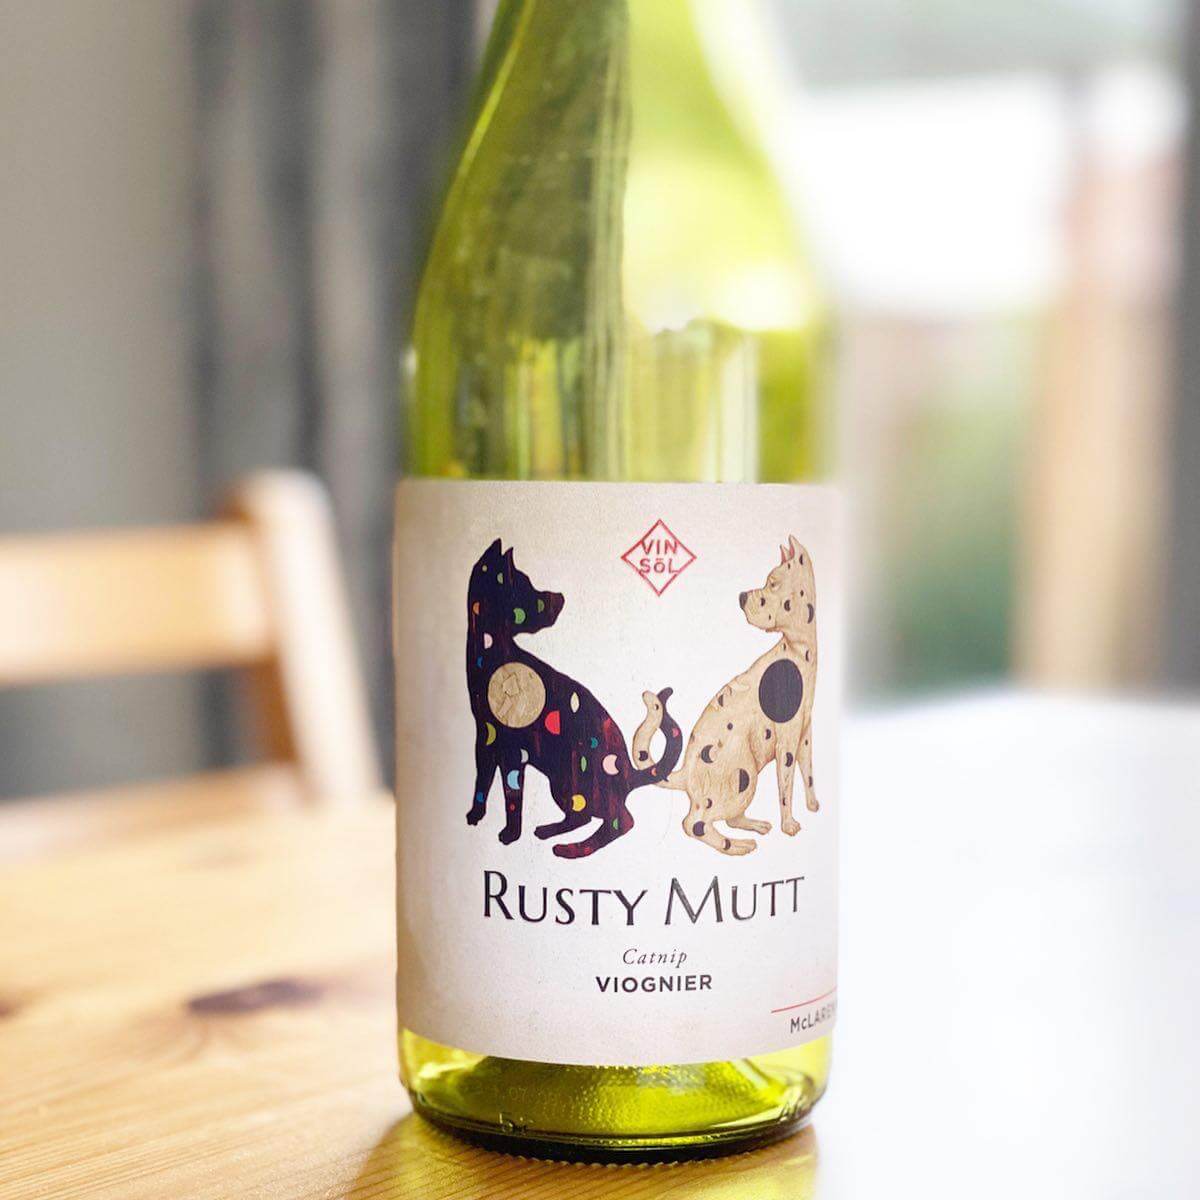 Rusty Mutt 2019 Catnip Viognier - McLaren Vale